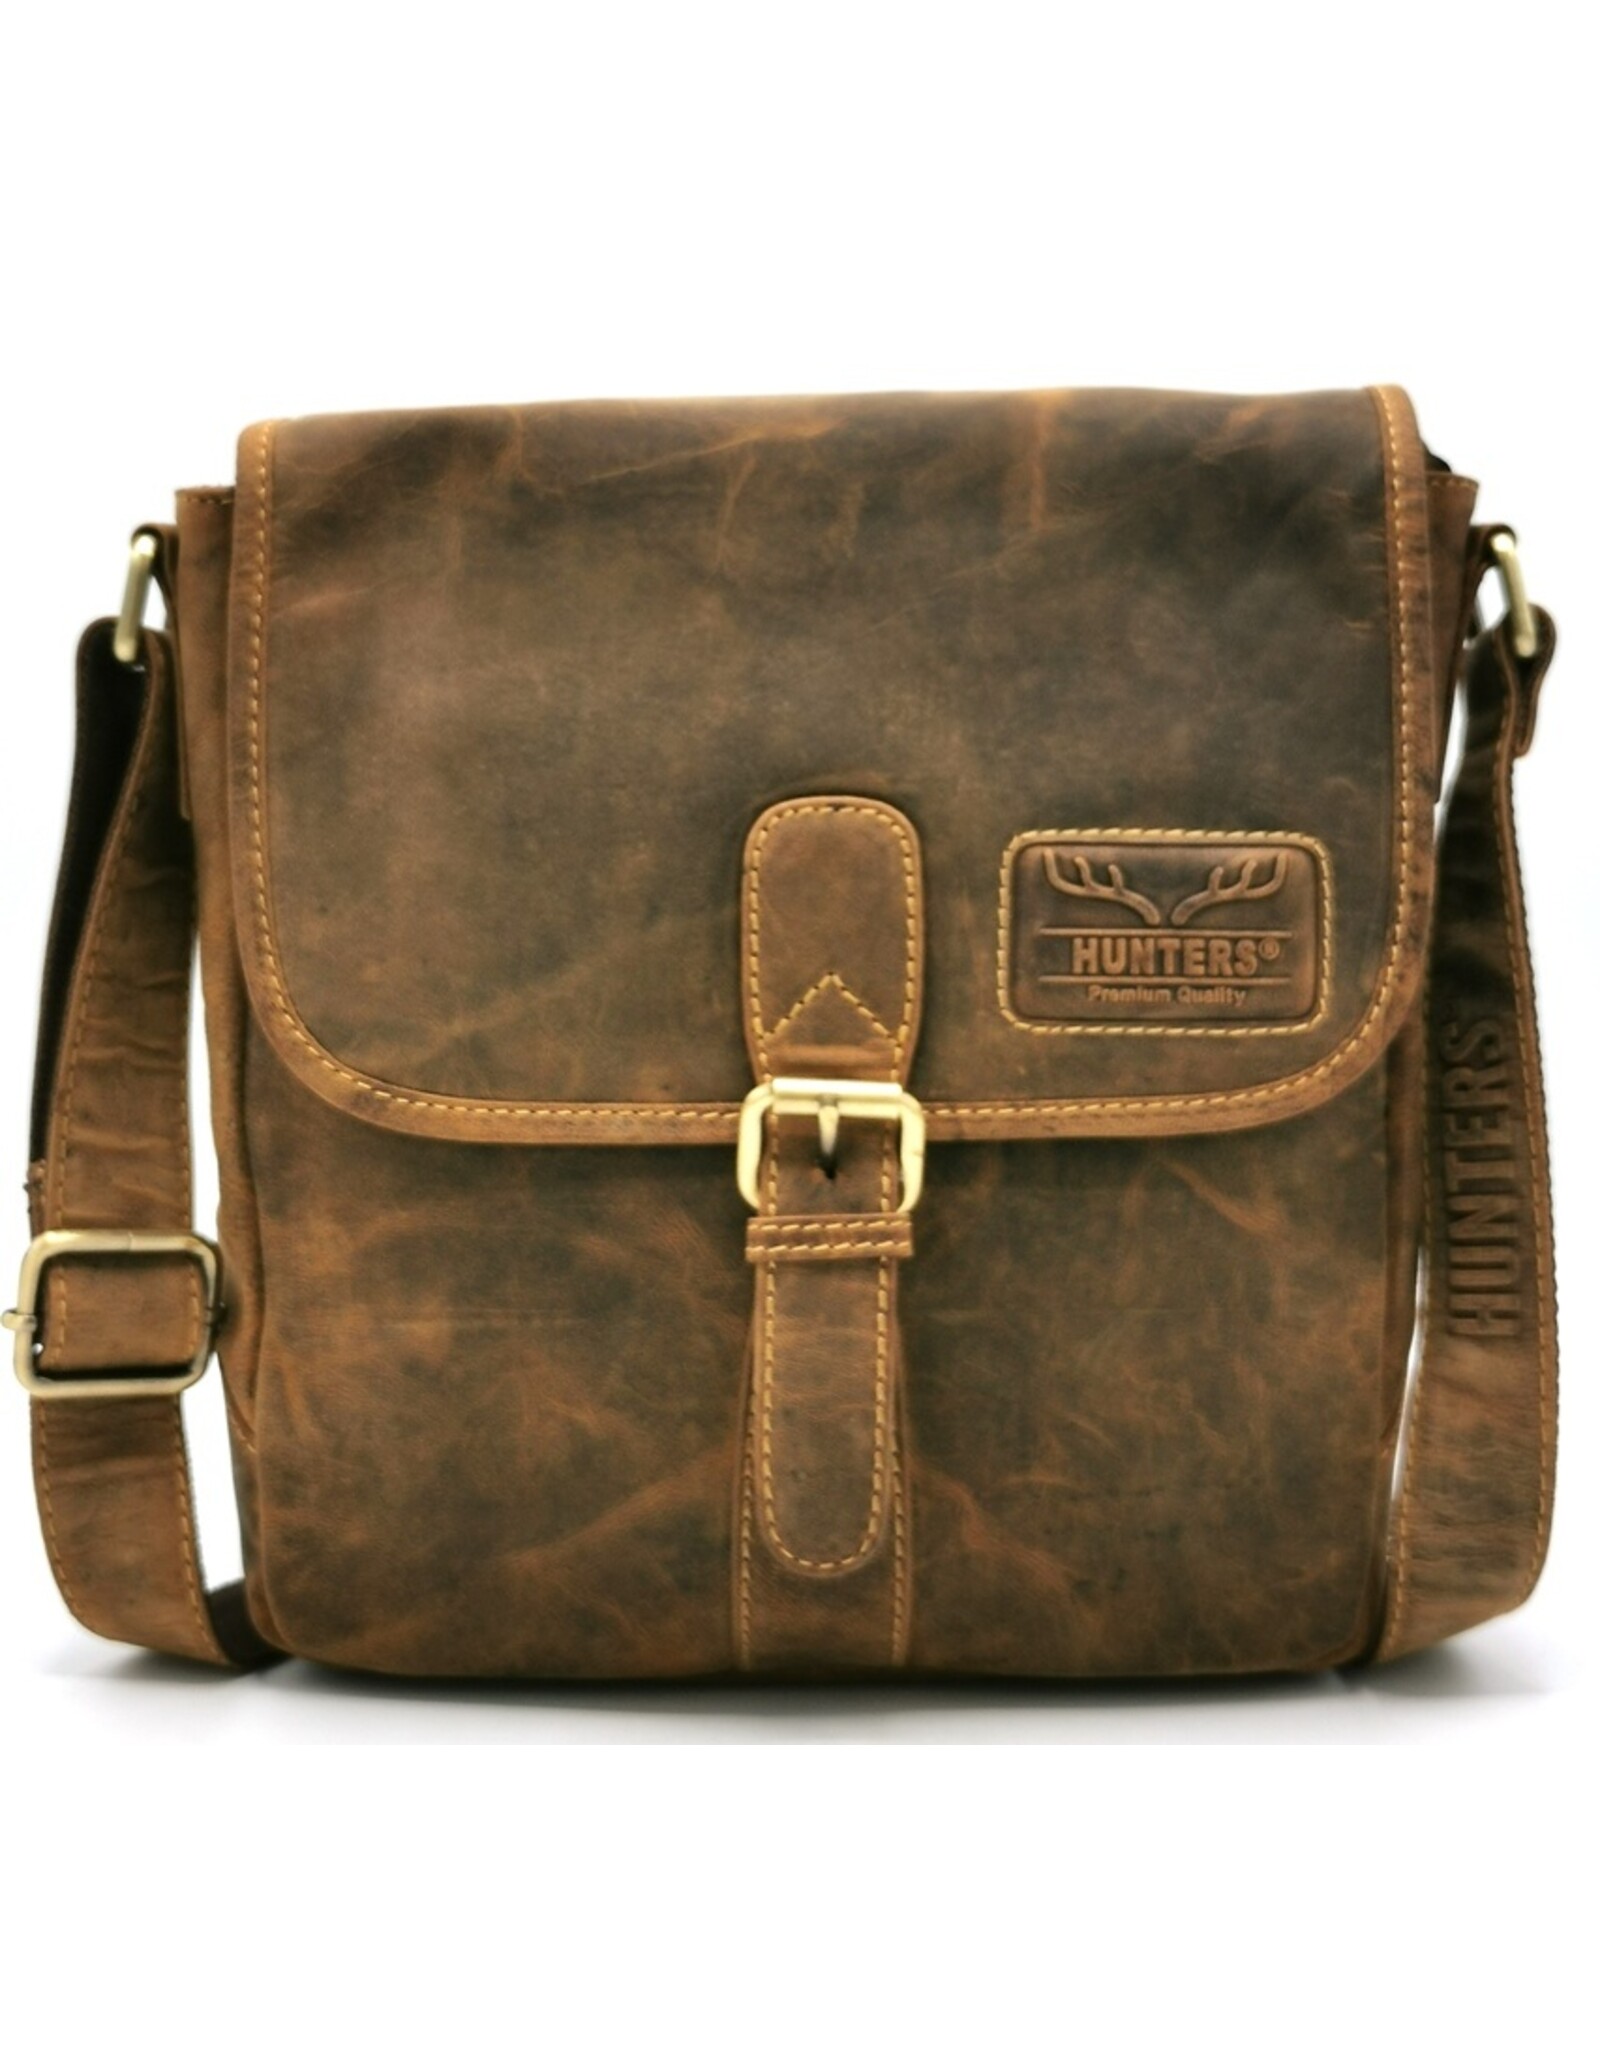 Hunters Leather Shoulder bags - Hunters Leather Shoulder bag with buckle